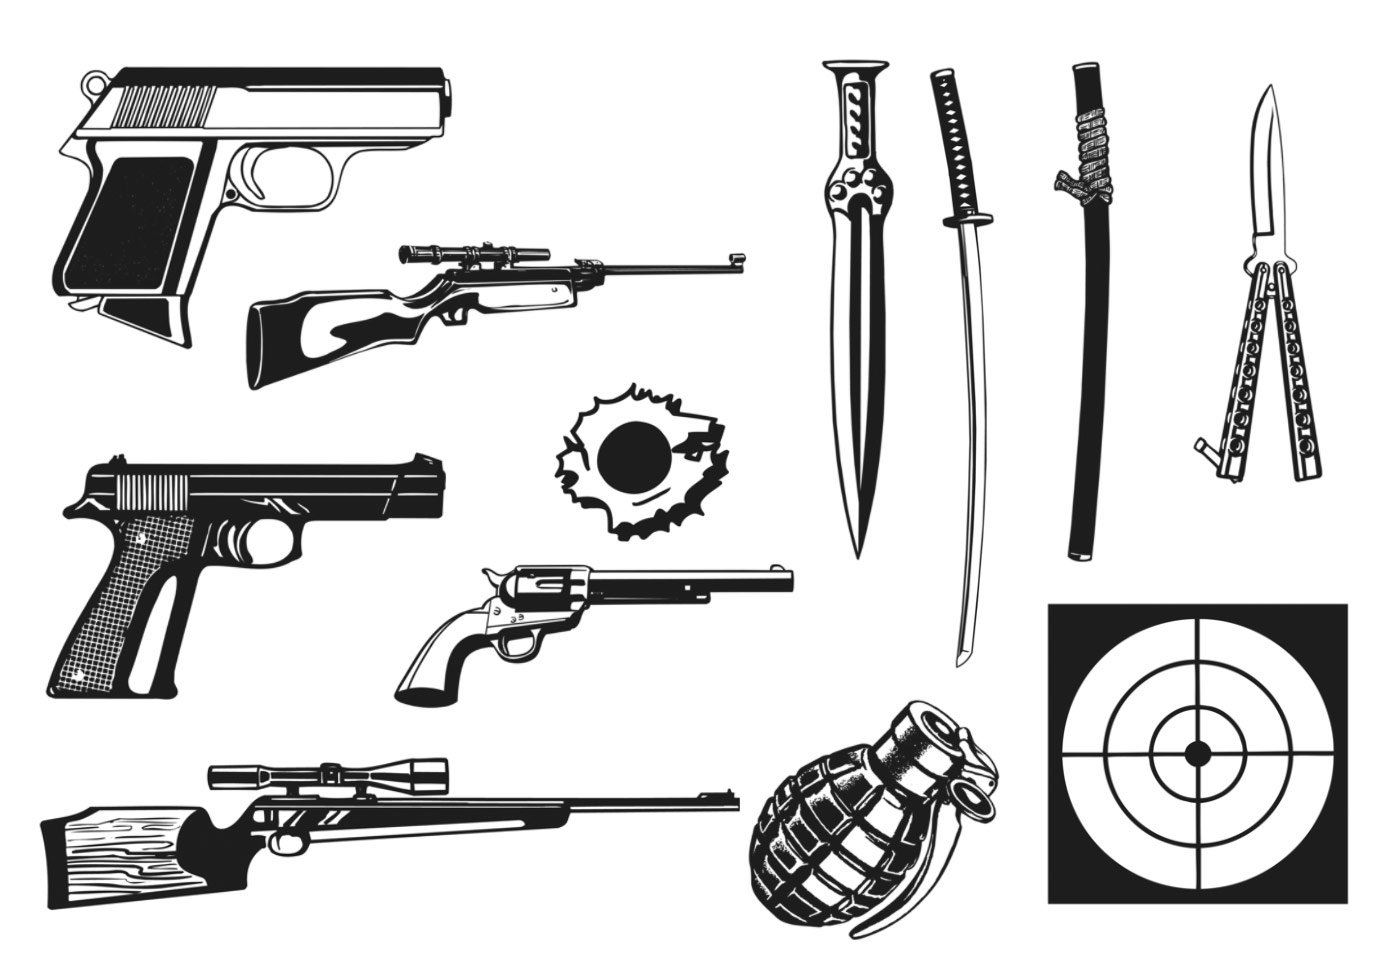 Weapons Vector Pack - Download Free Vectors, Clipart Graphics & Vector Art